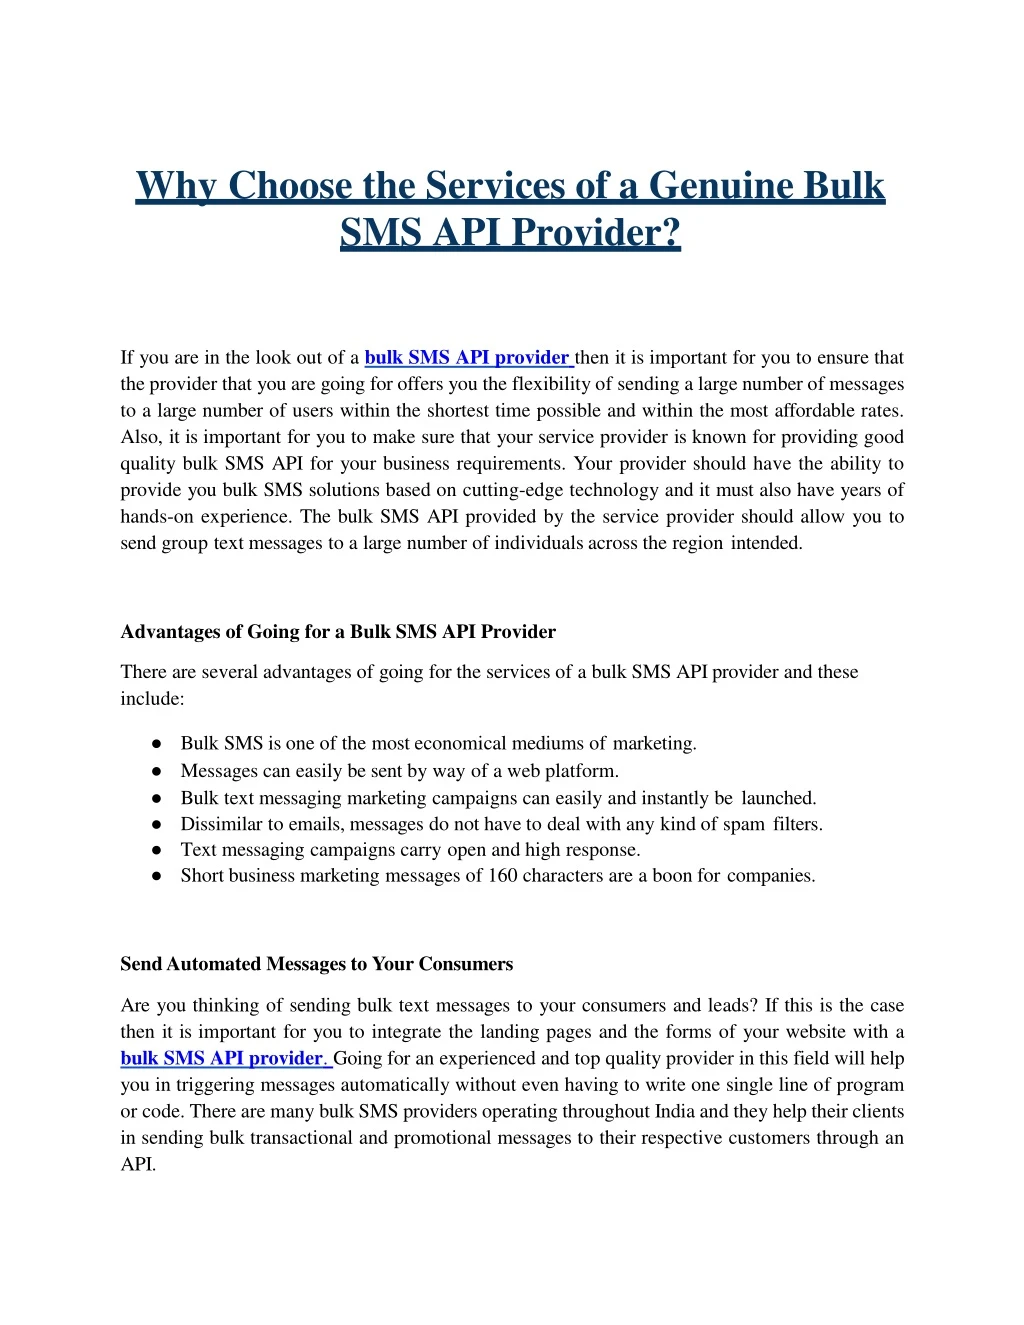 why choose the services of a genuine bulk sms api provider